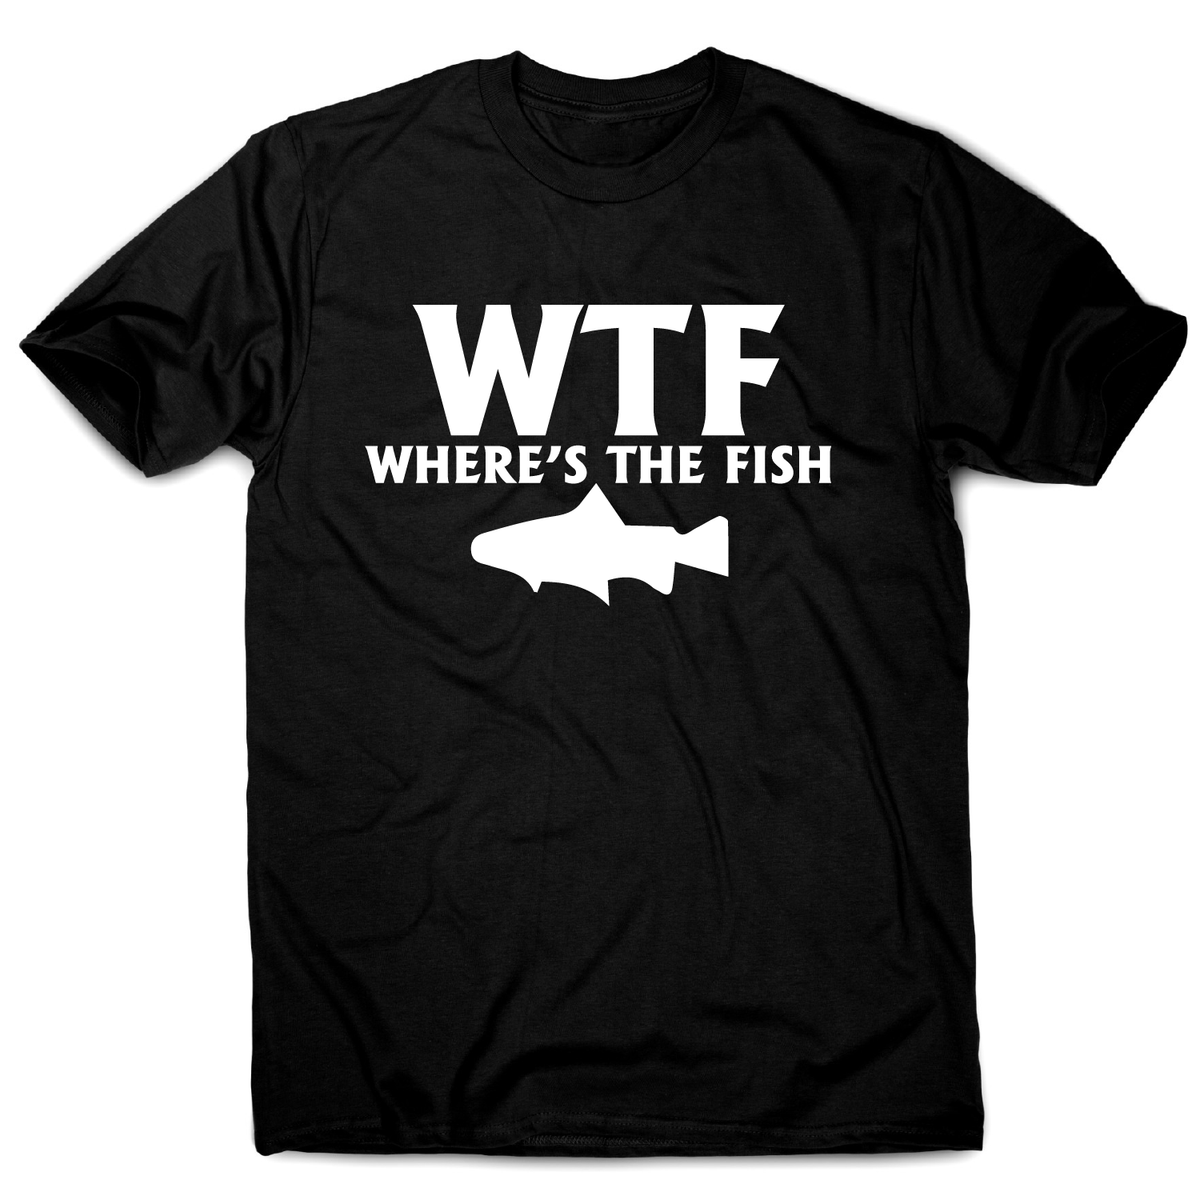 Funny fishing t-shirt mens  Wtf where's the fish slogan humour